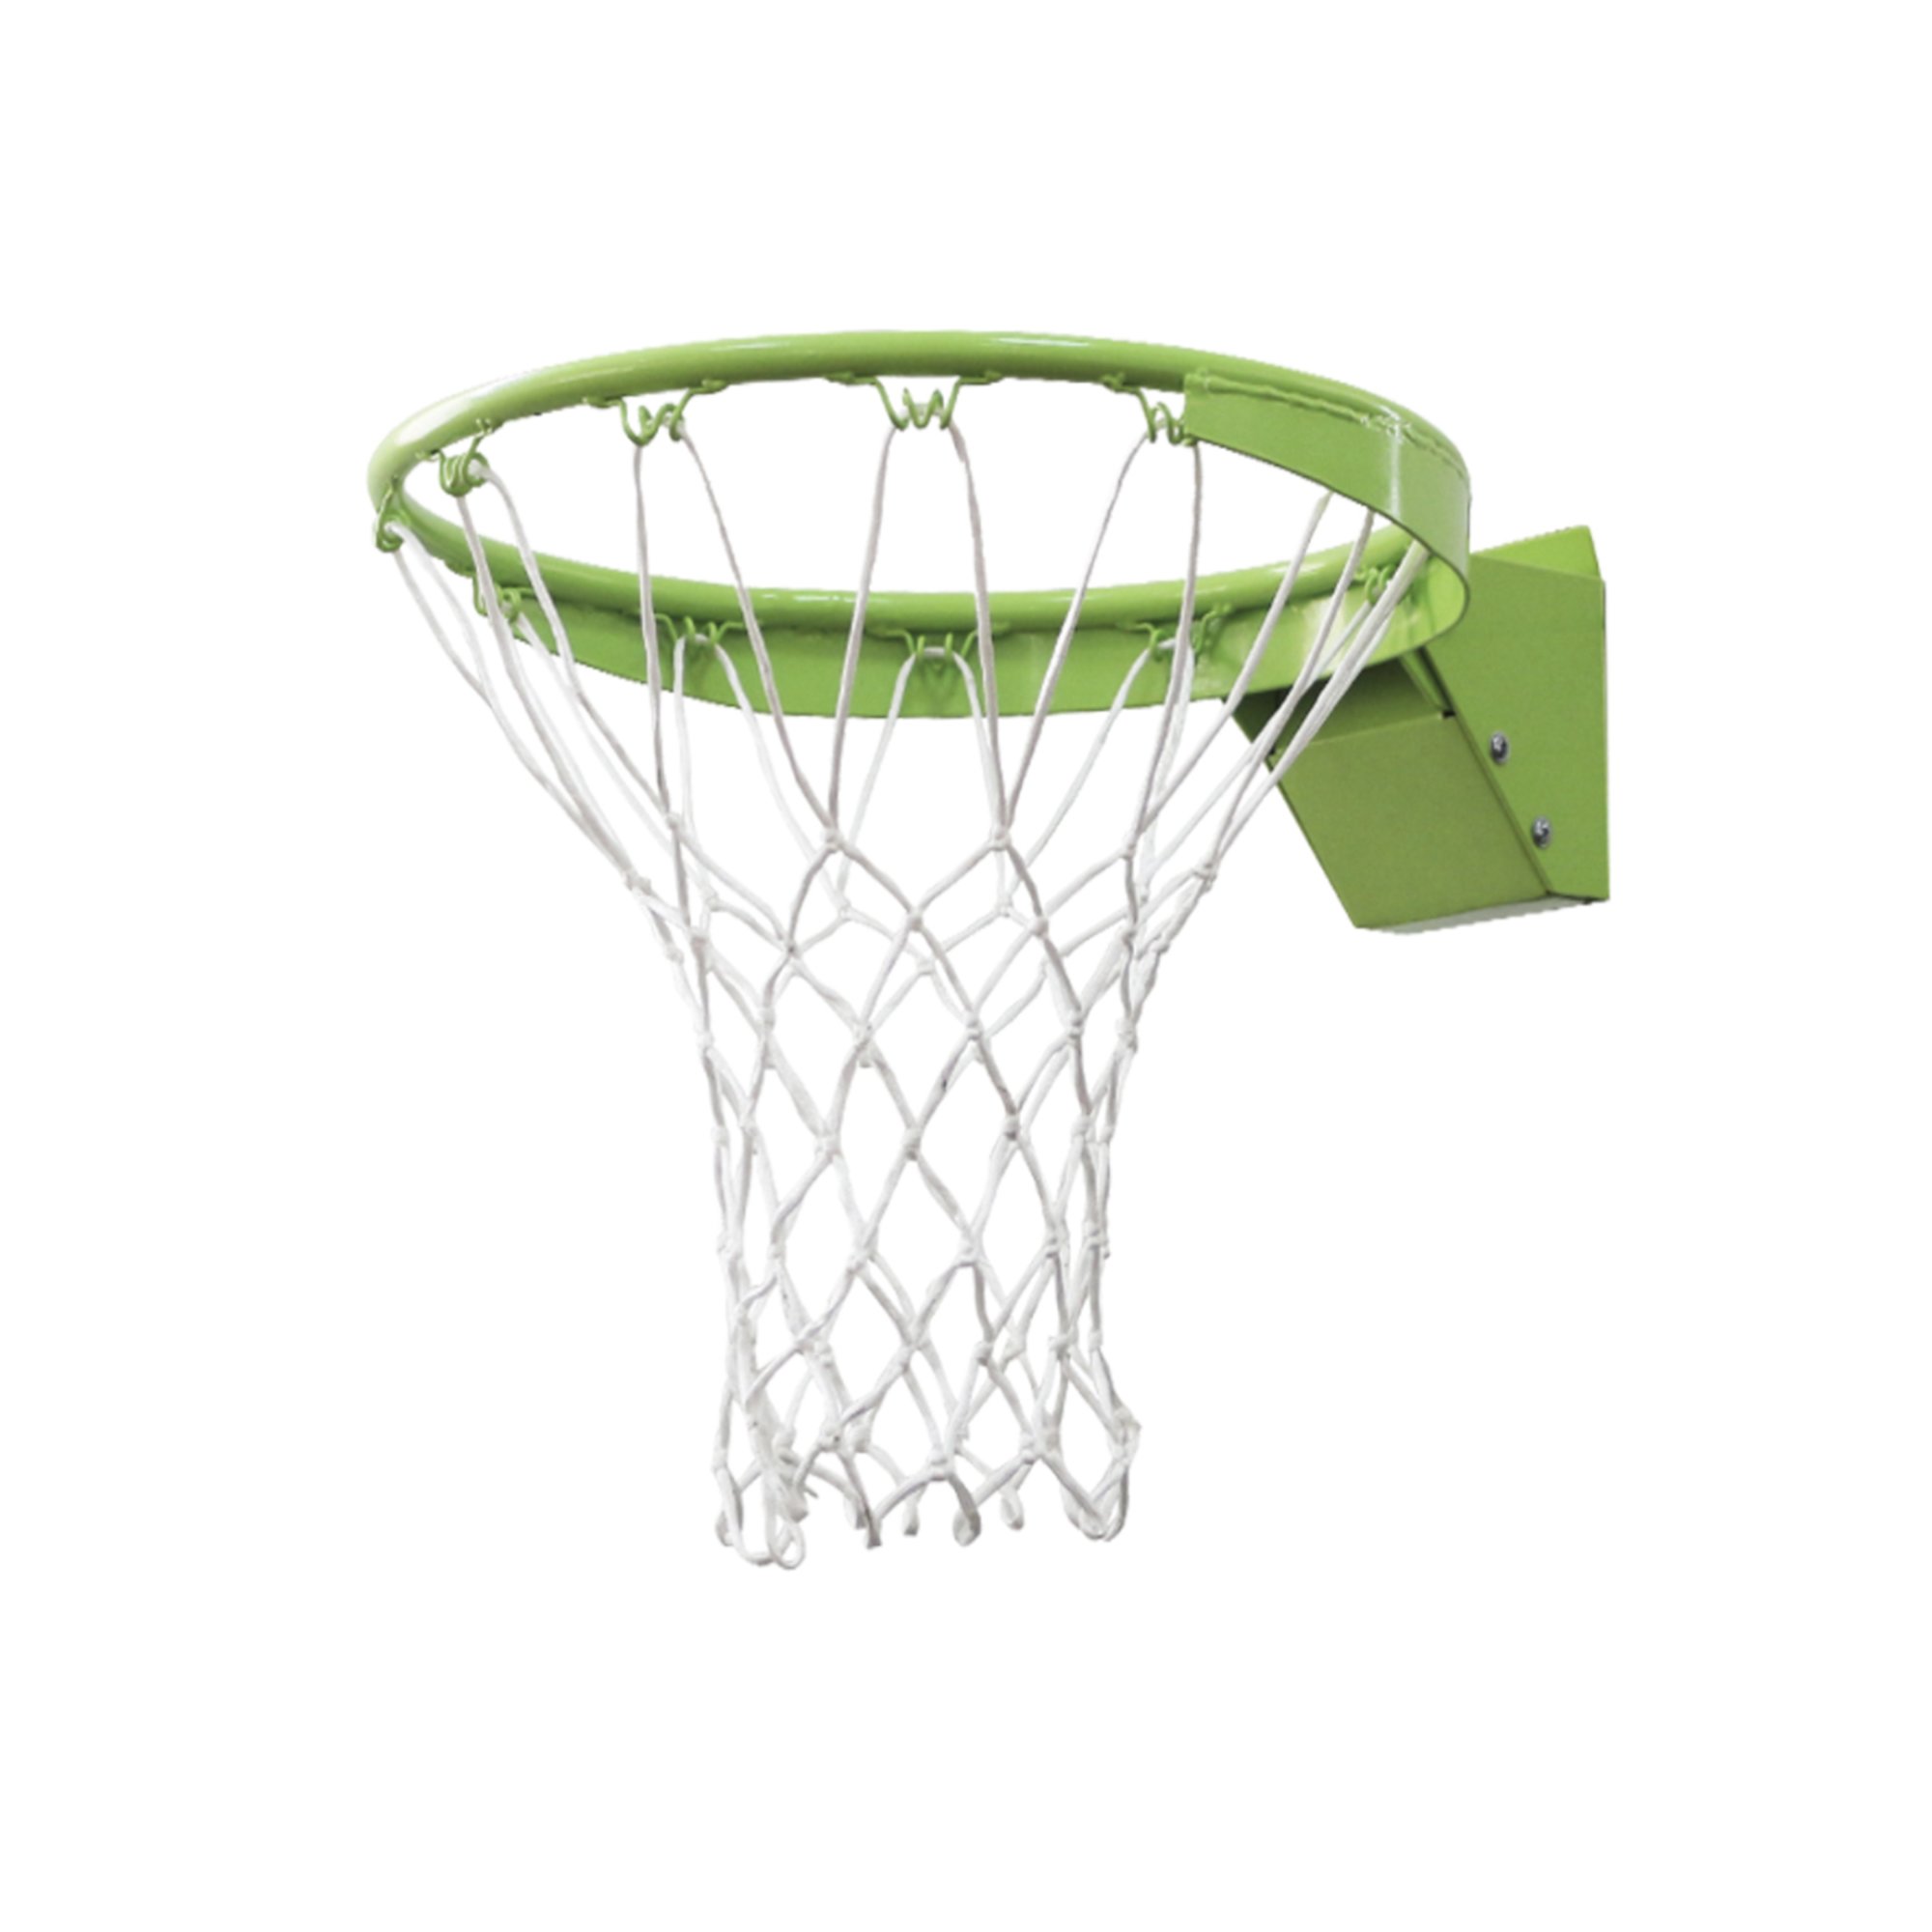 EXIT - Basketball Dunk Hoop and Net - green (46.50.30.00)